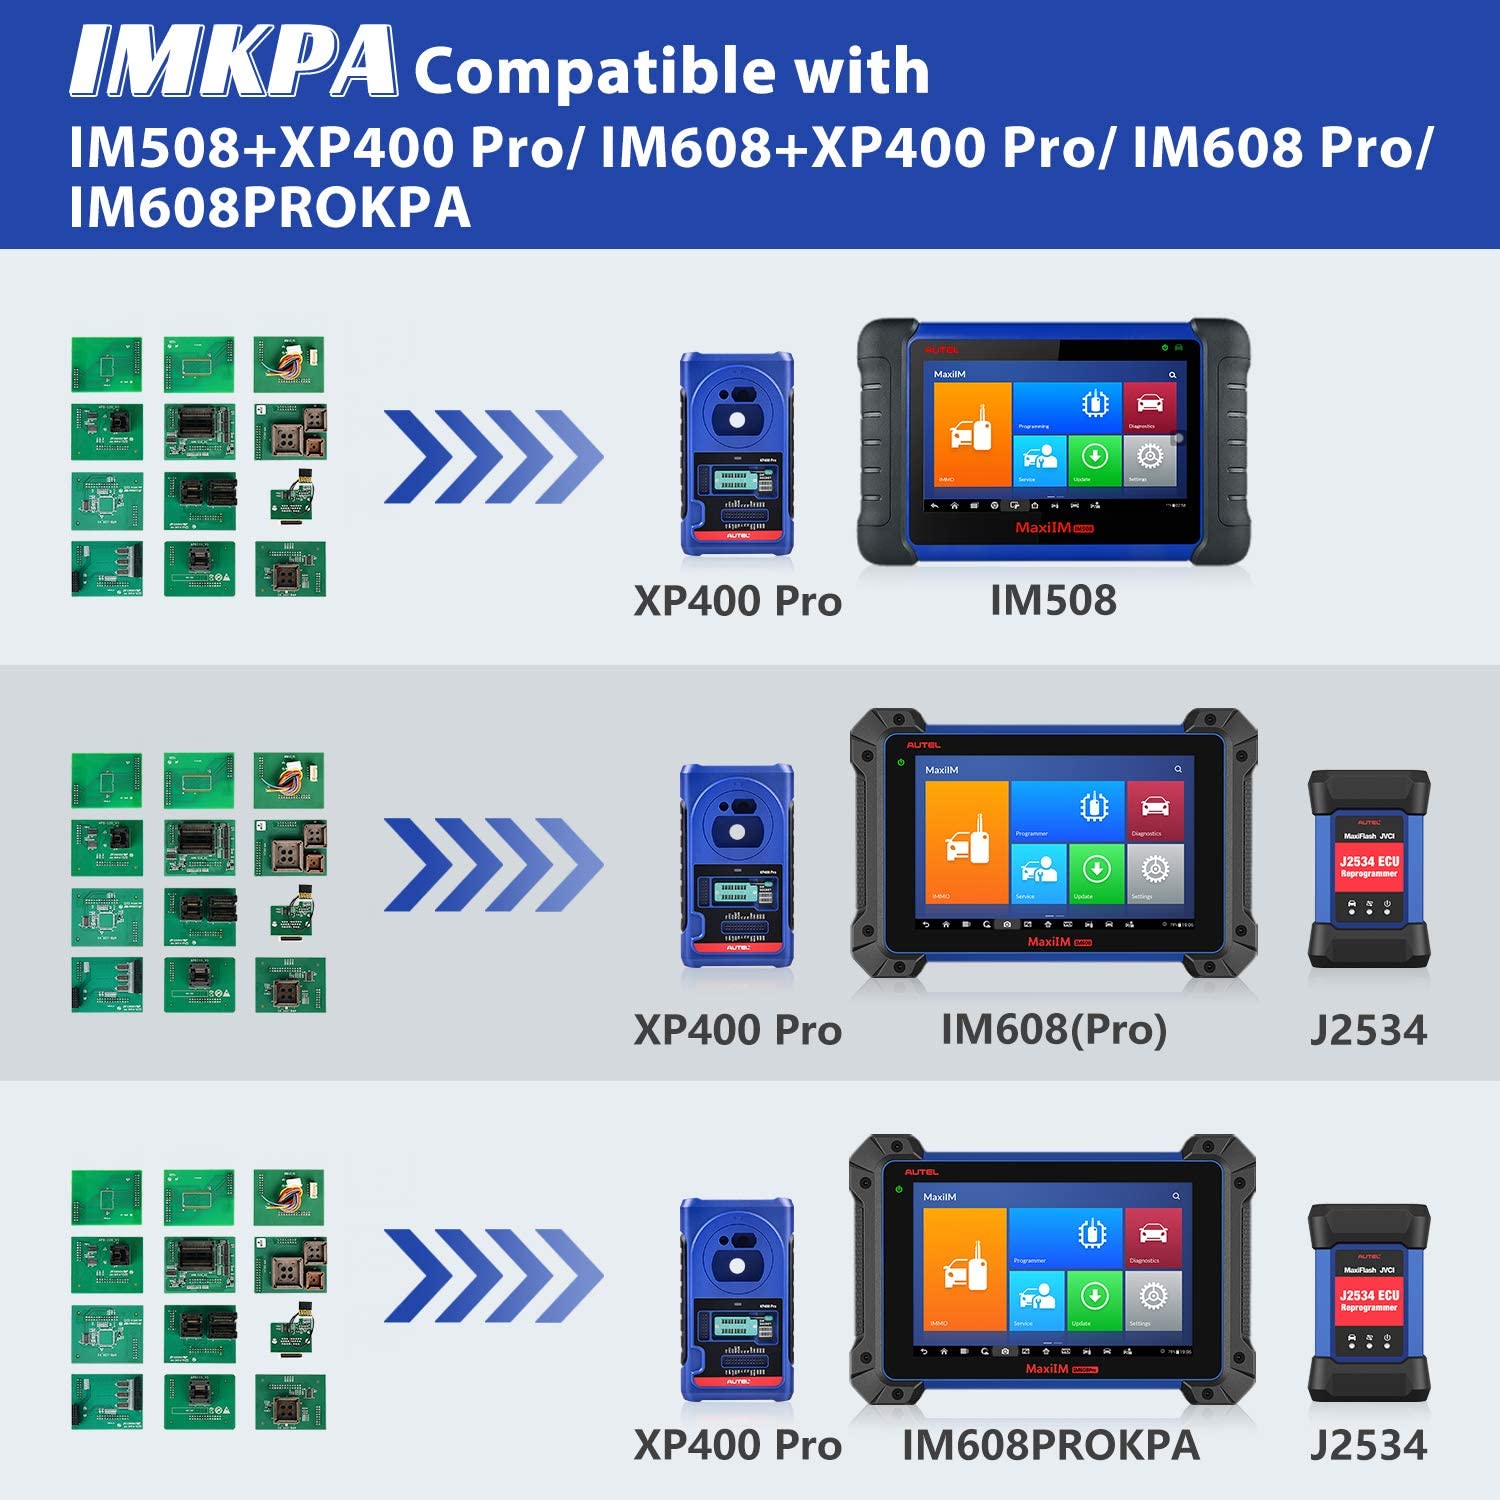 Autel IMKPA Compatible with XP400 Pro, IM608 pro, IM508 pro